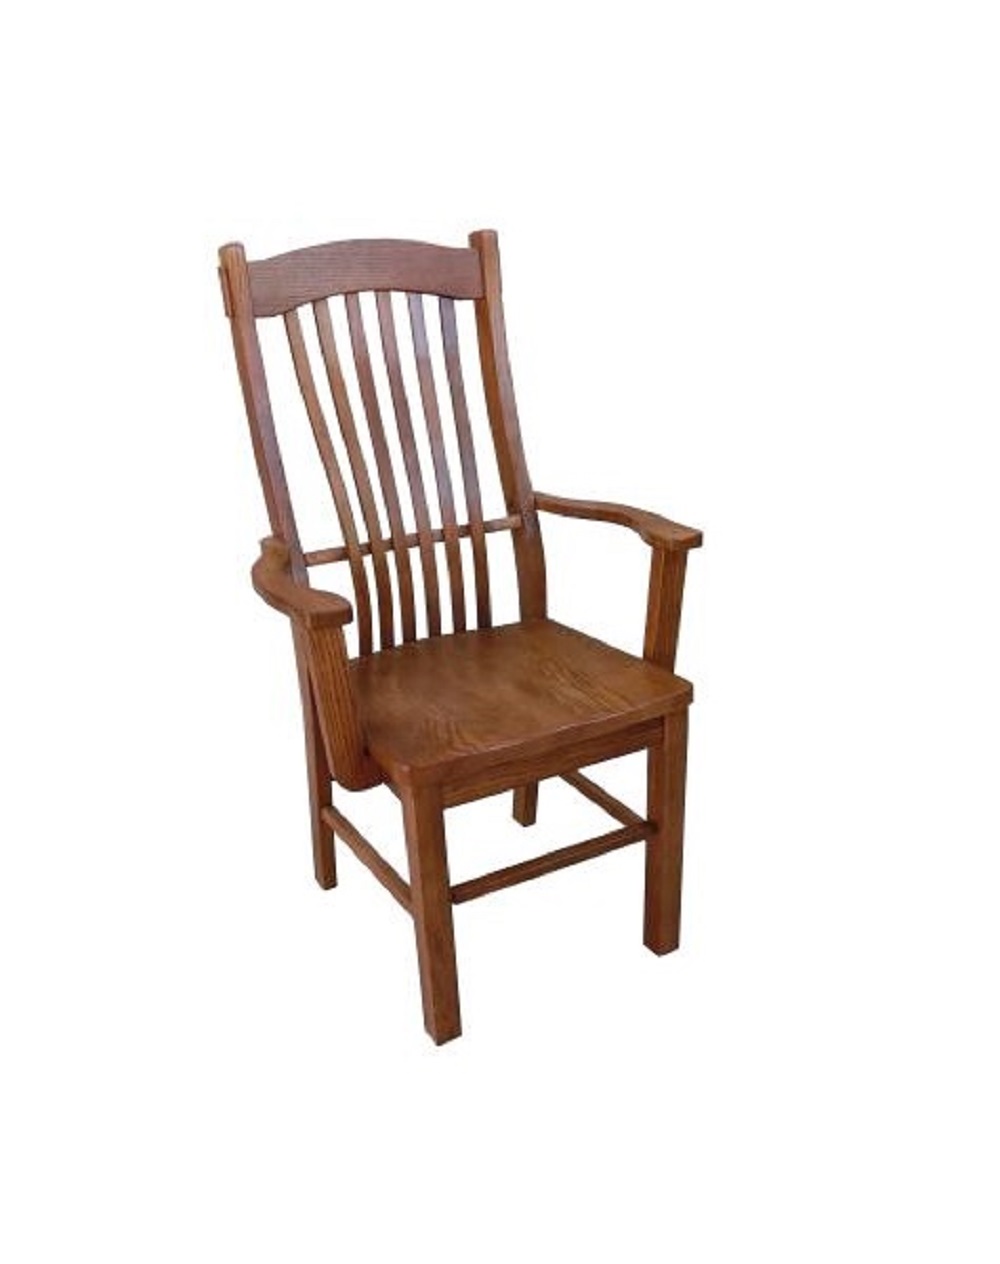 25.25" X 23.125" X 41.5" Harvest Oak Hardwood Arm Chair